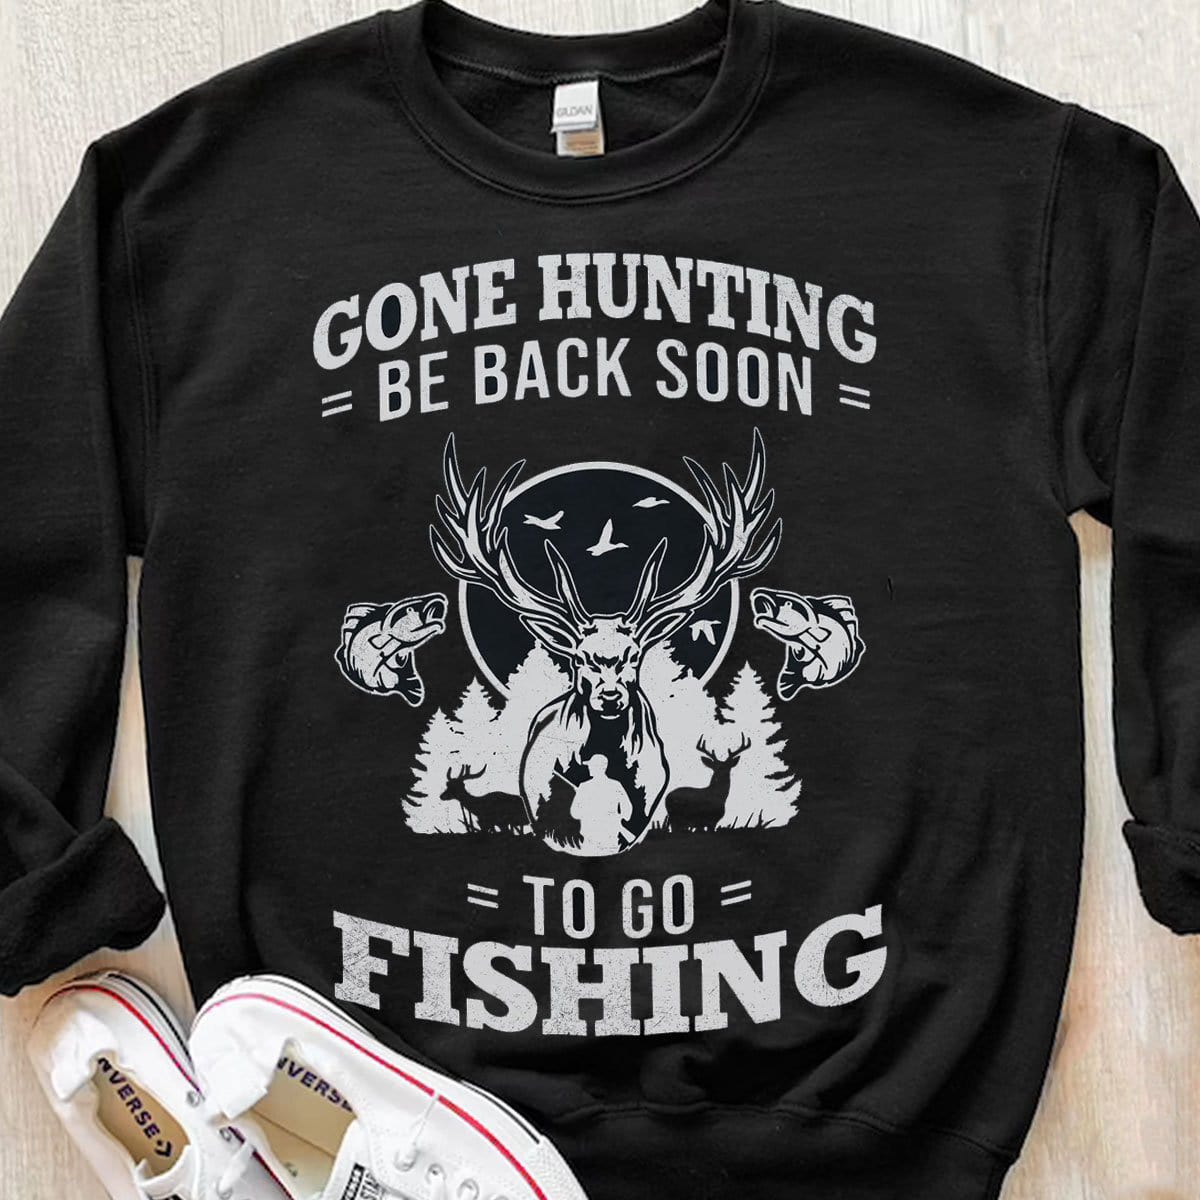 Hunting And Fishing Shirts, Deer Hunting Hoodies, Gone Hunting Be